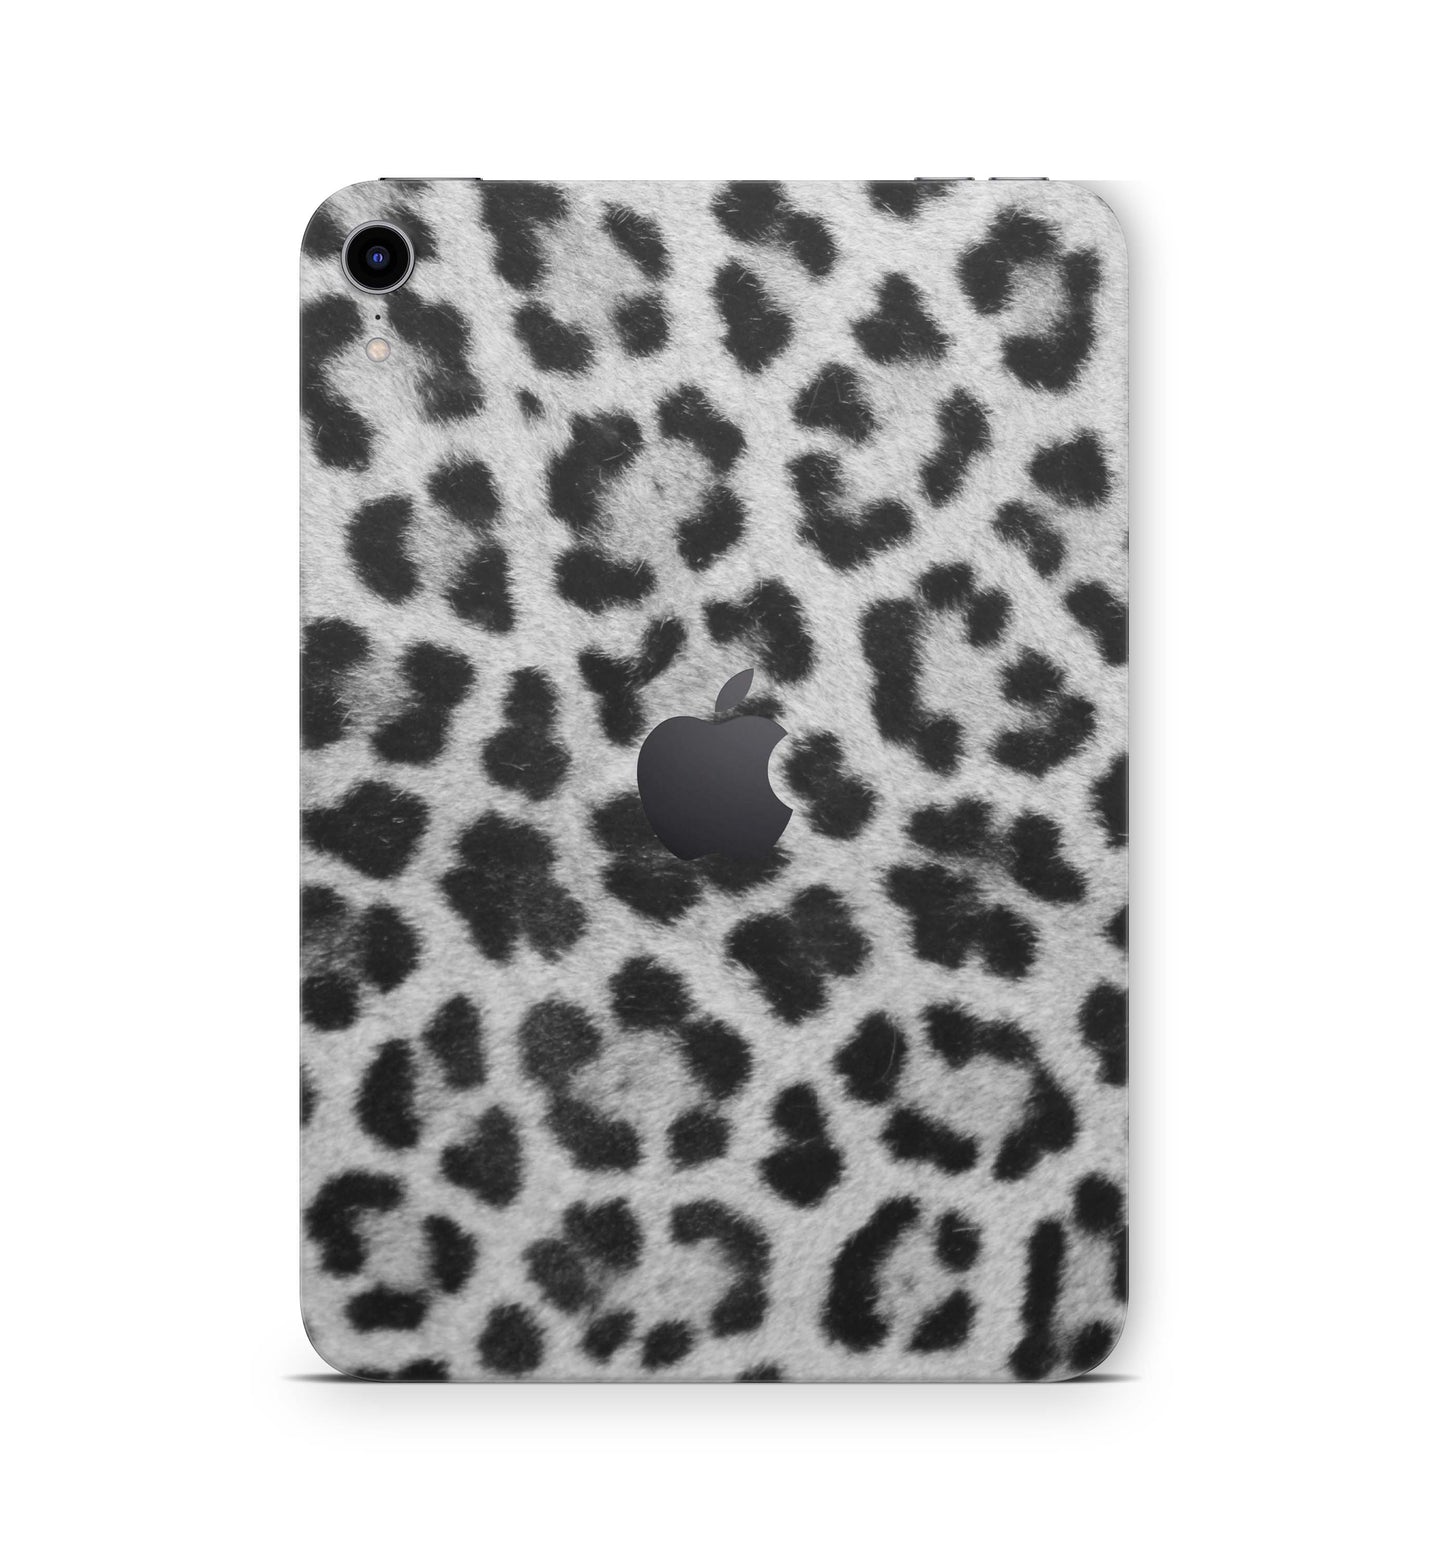 iPad Air Skin Design Cover Folie Vinyl Skins & Wraps für alle iPad Air Modelle Aufkleber Skins4u Leopardenfell  